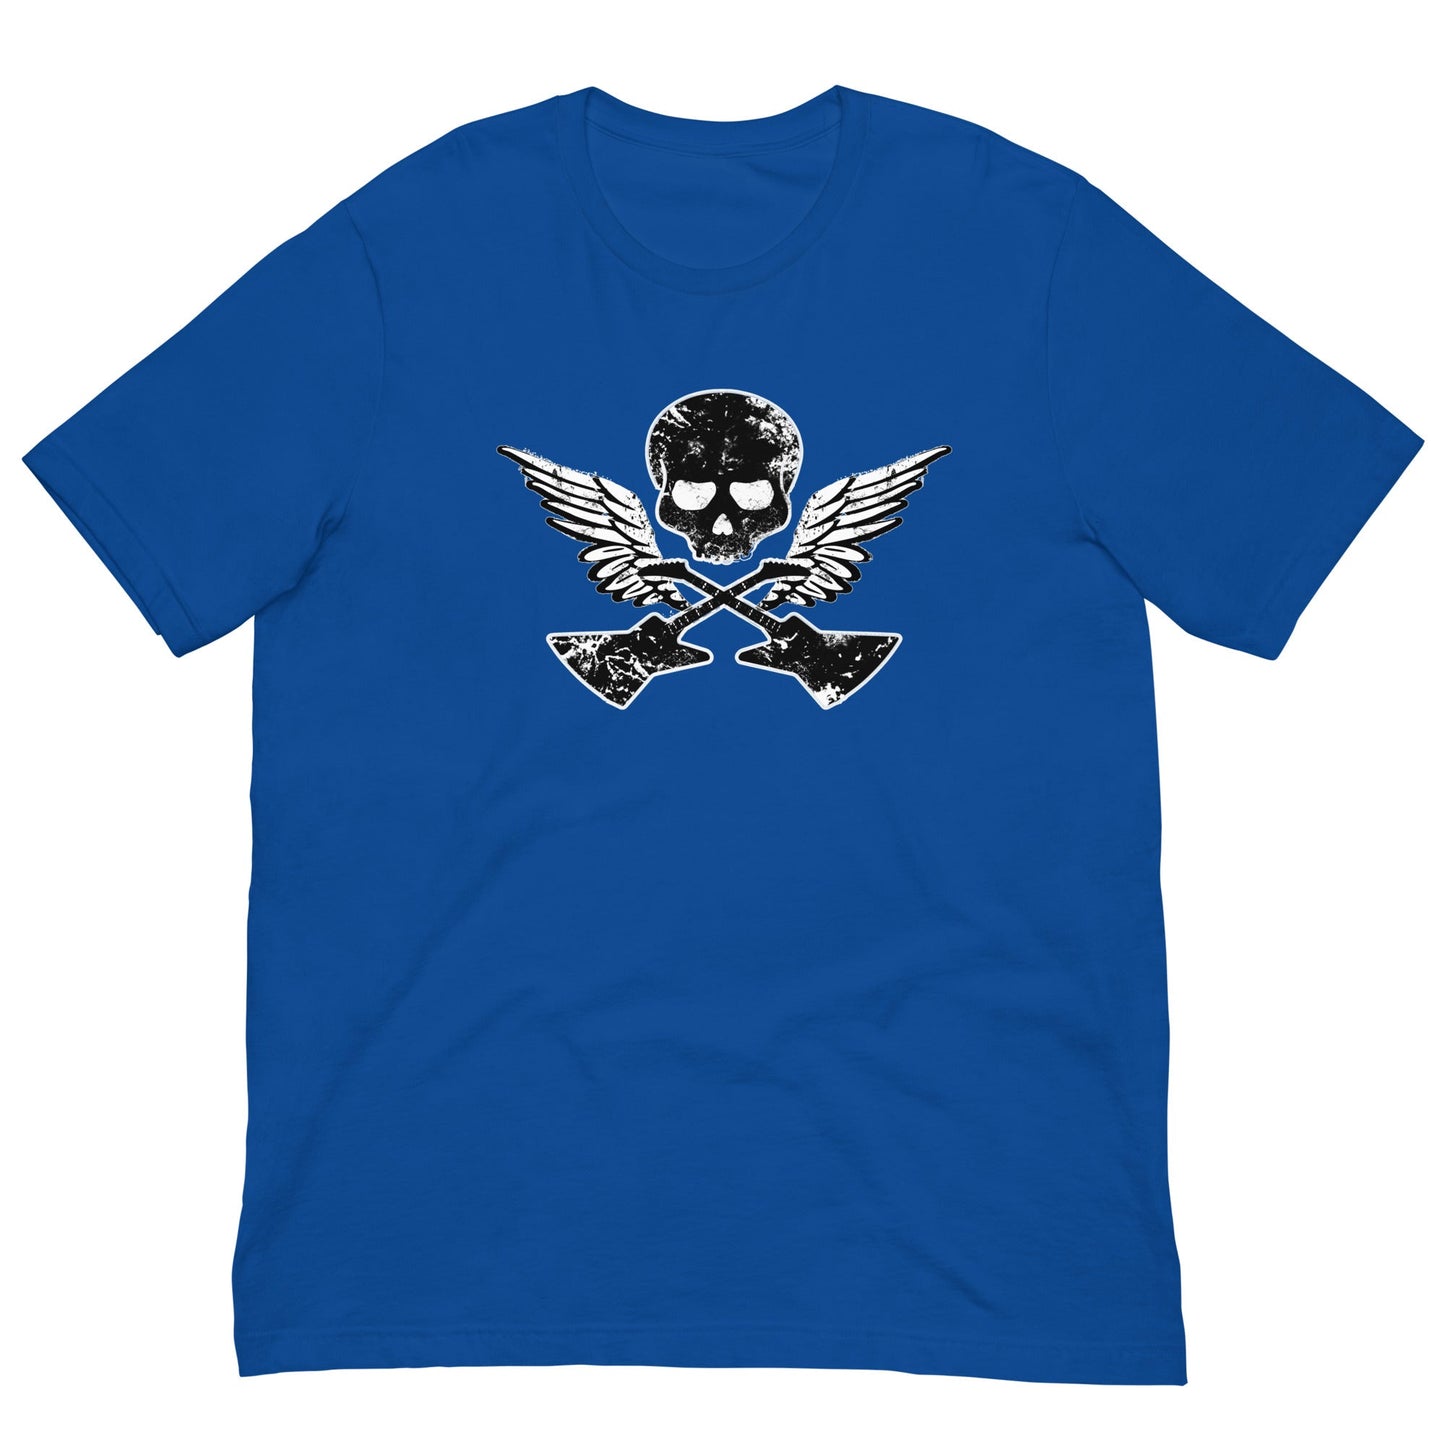 Scar Design T shirt True Royal / S Skull Guitar Wings T-shirt